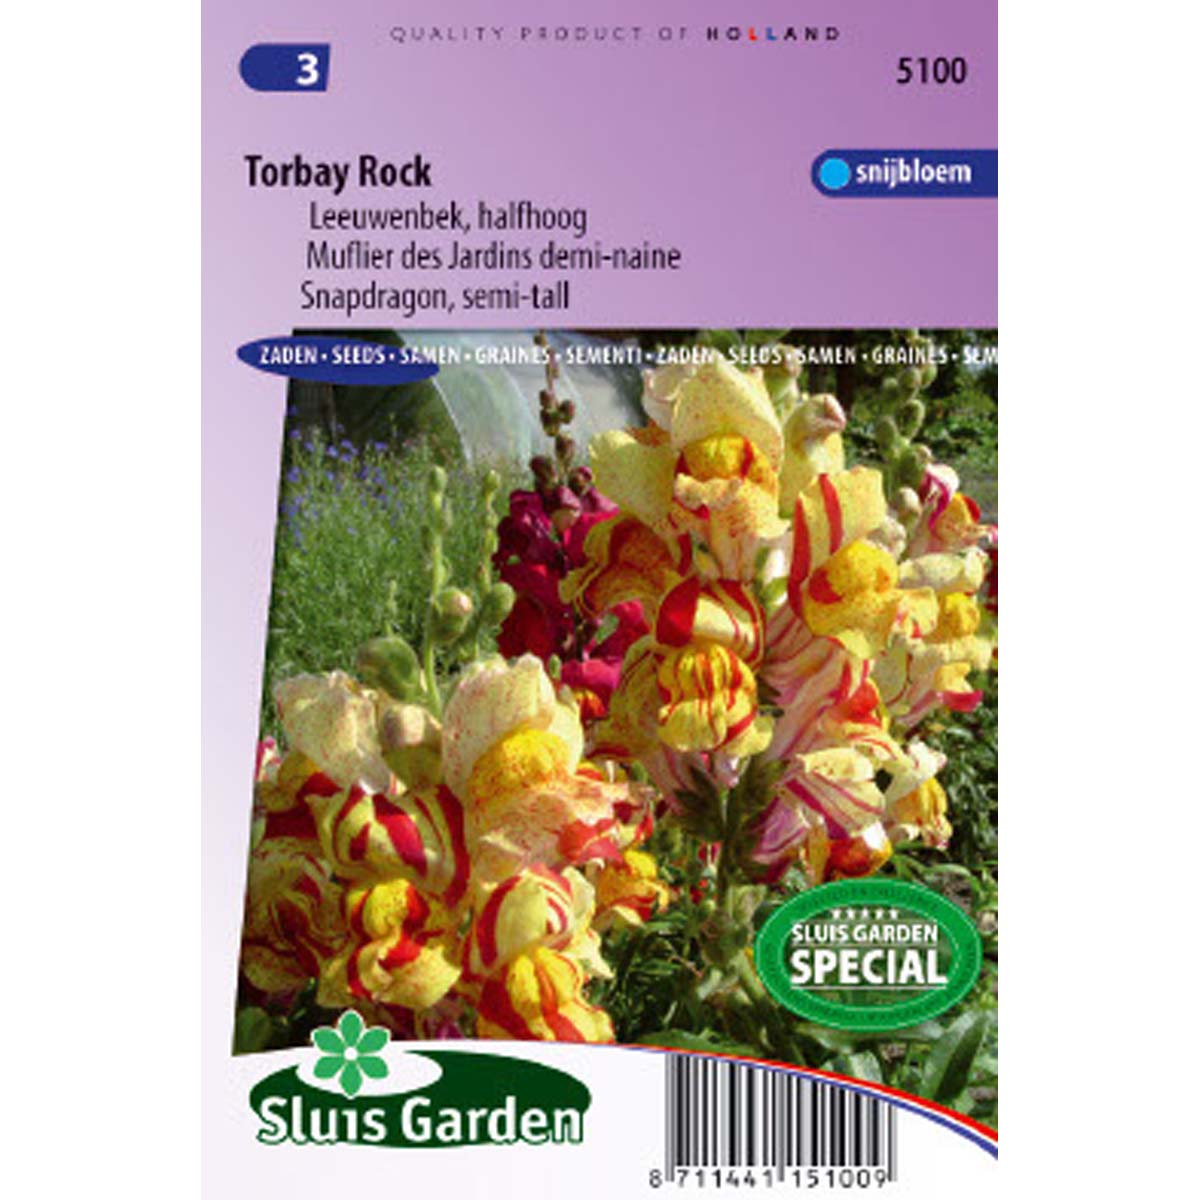 Muflier des jardins demi-nain Torbay Rock - Antirrhinum majus nanum